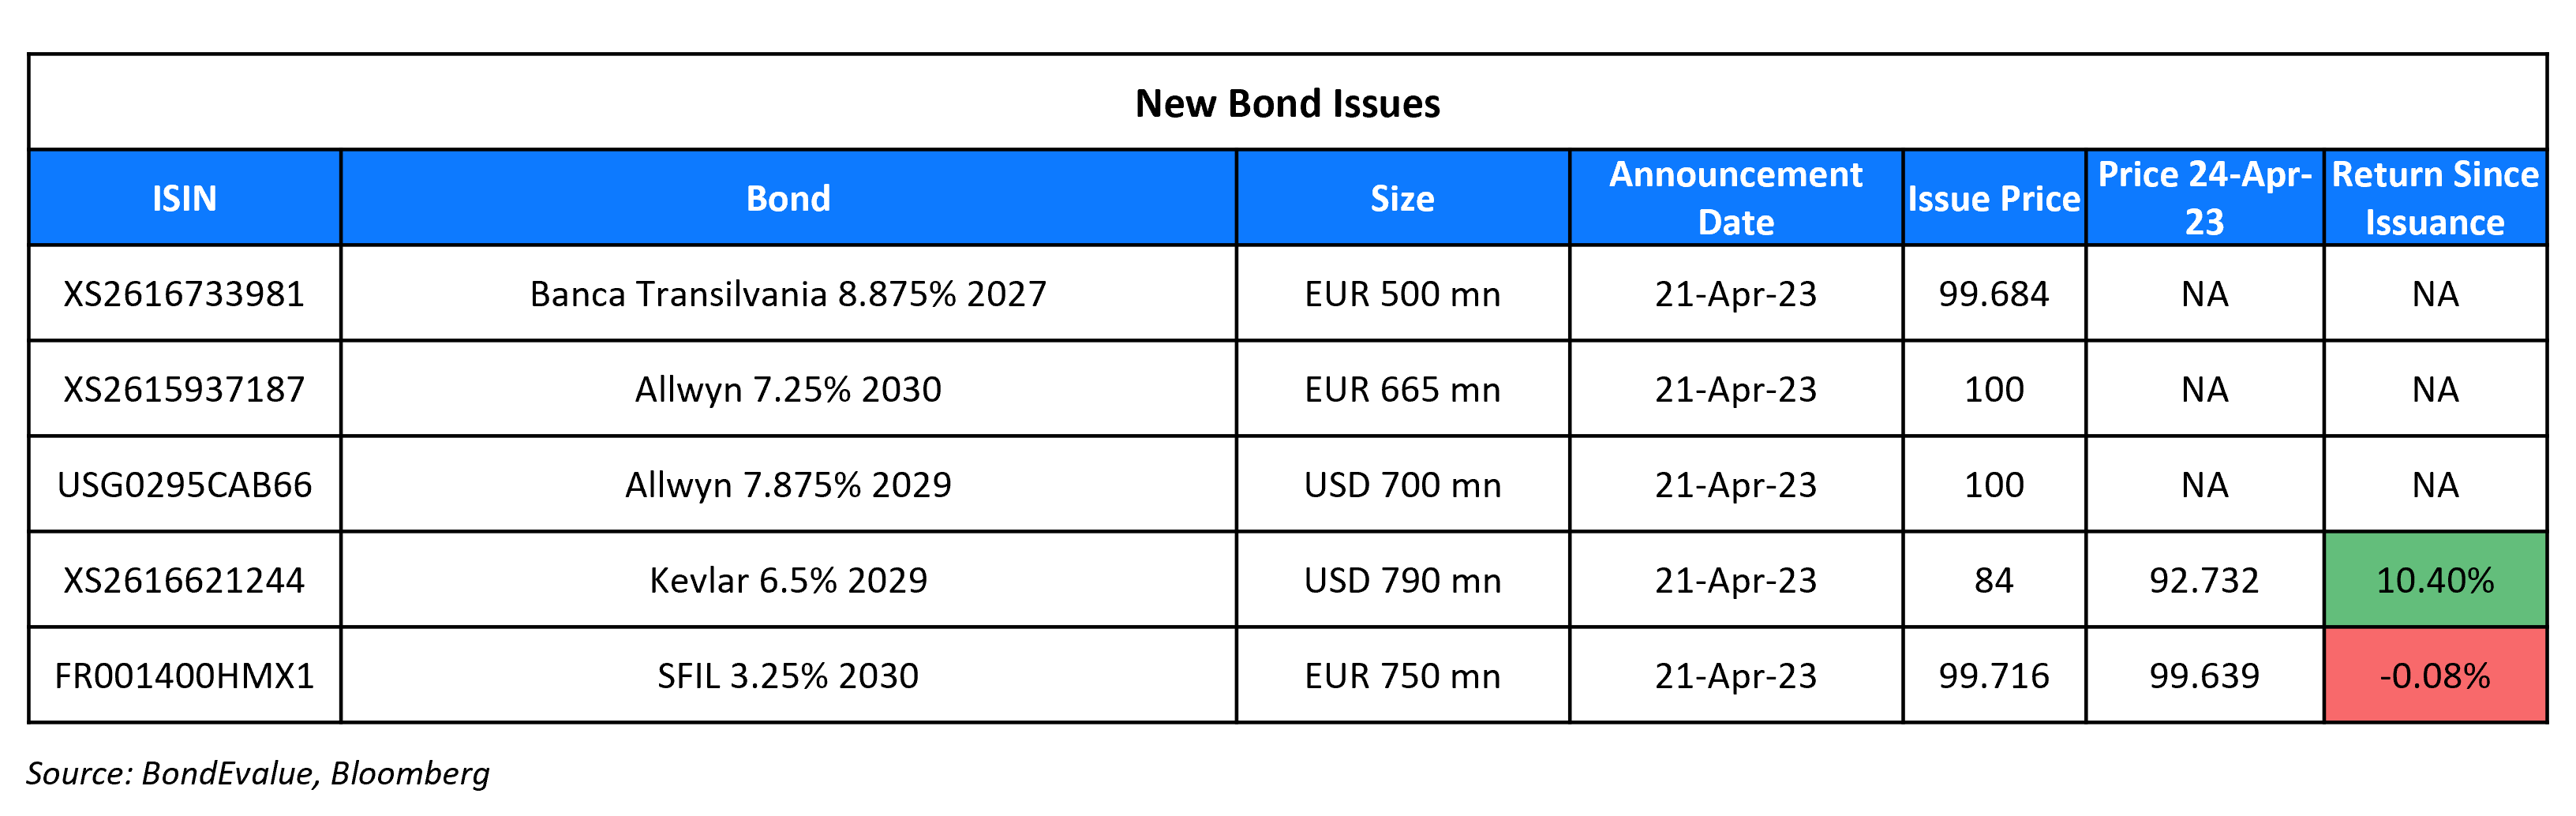 New Bond Issues 24 Apr 23